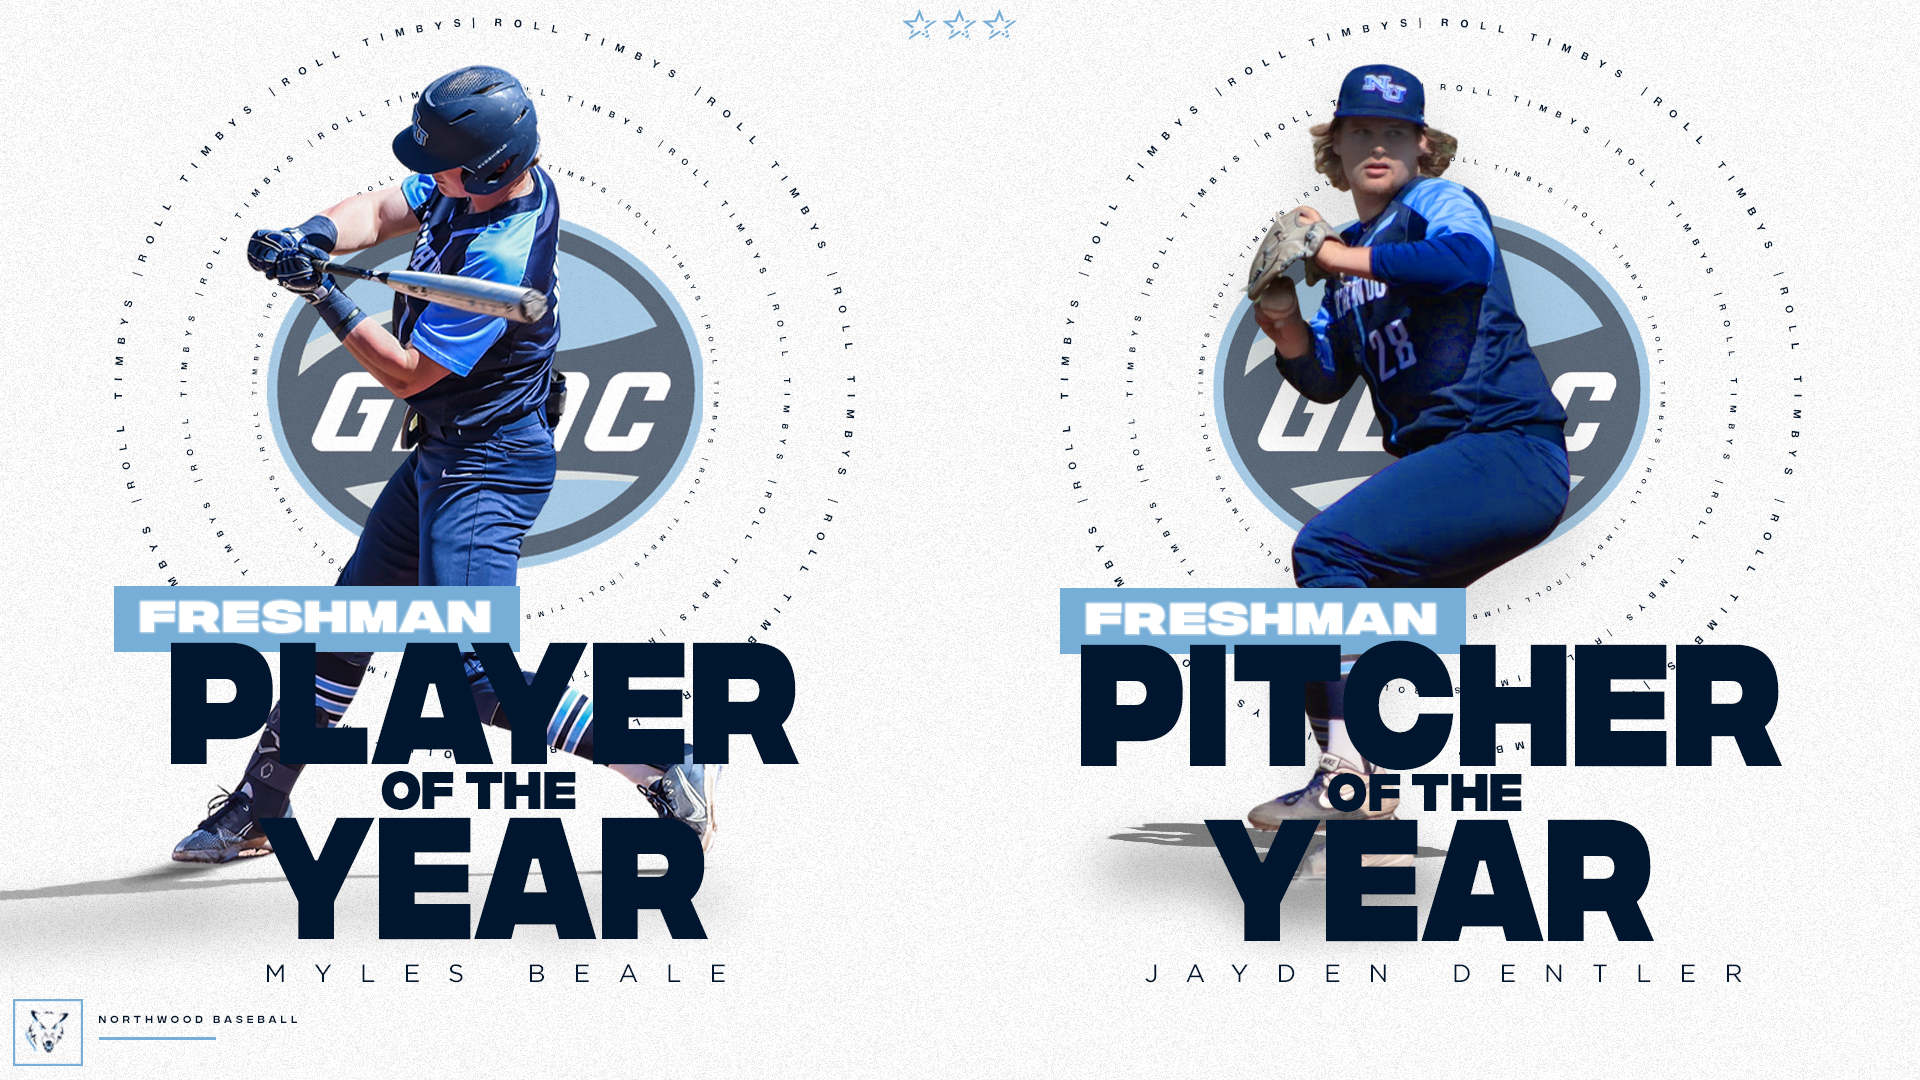 Myles Beale and Jayden Dentler Each Named GLIAC Baseball Freshman of the Year - NU Places Nine On All-GLIAC Team